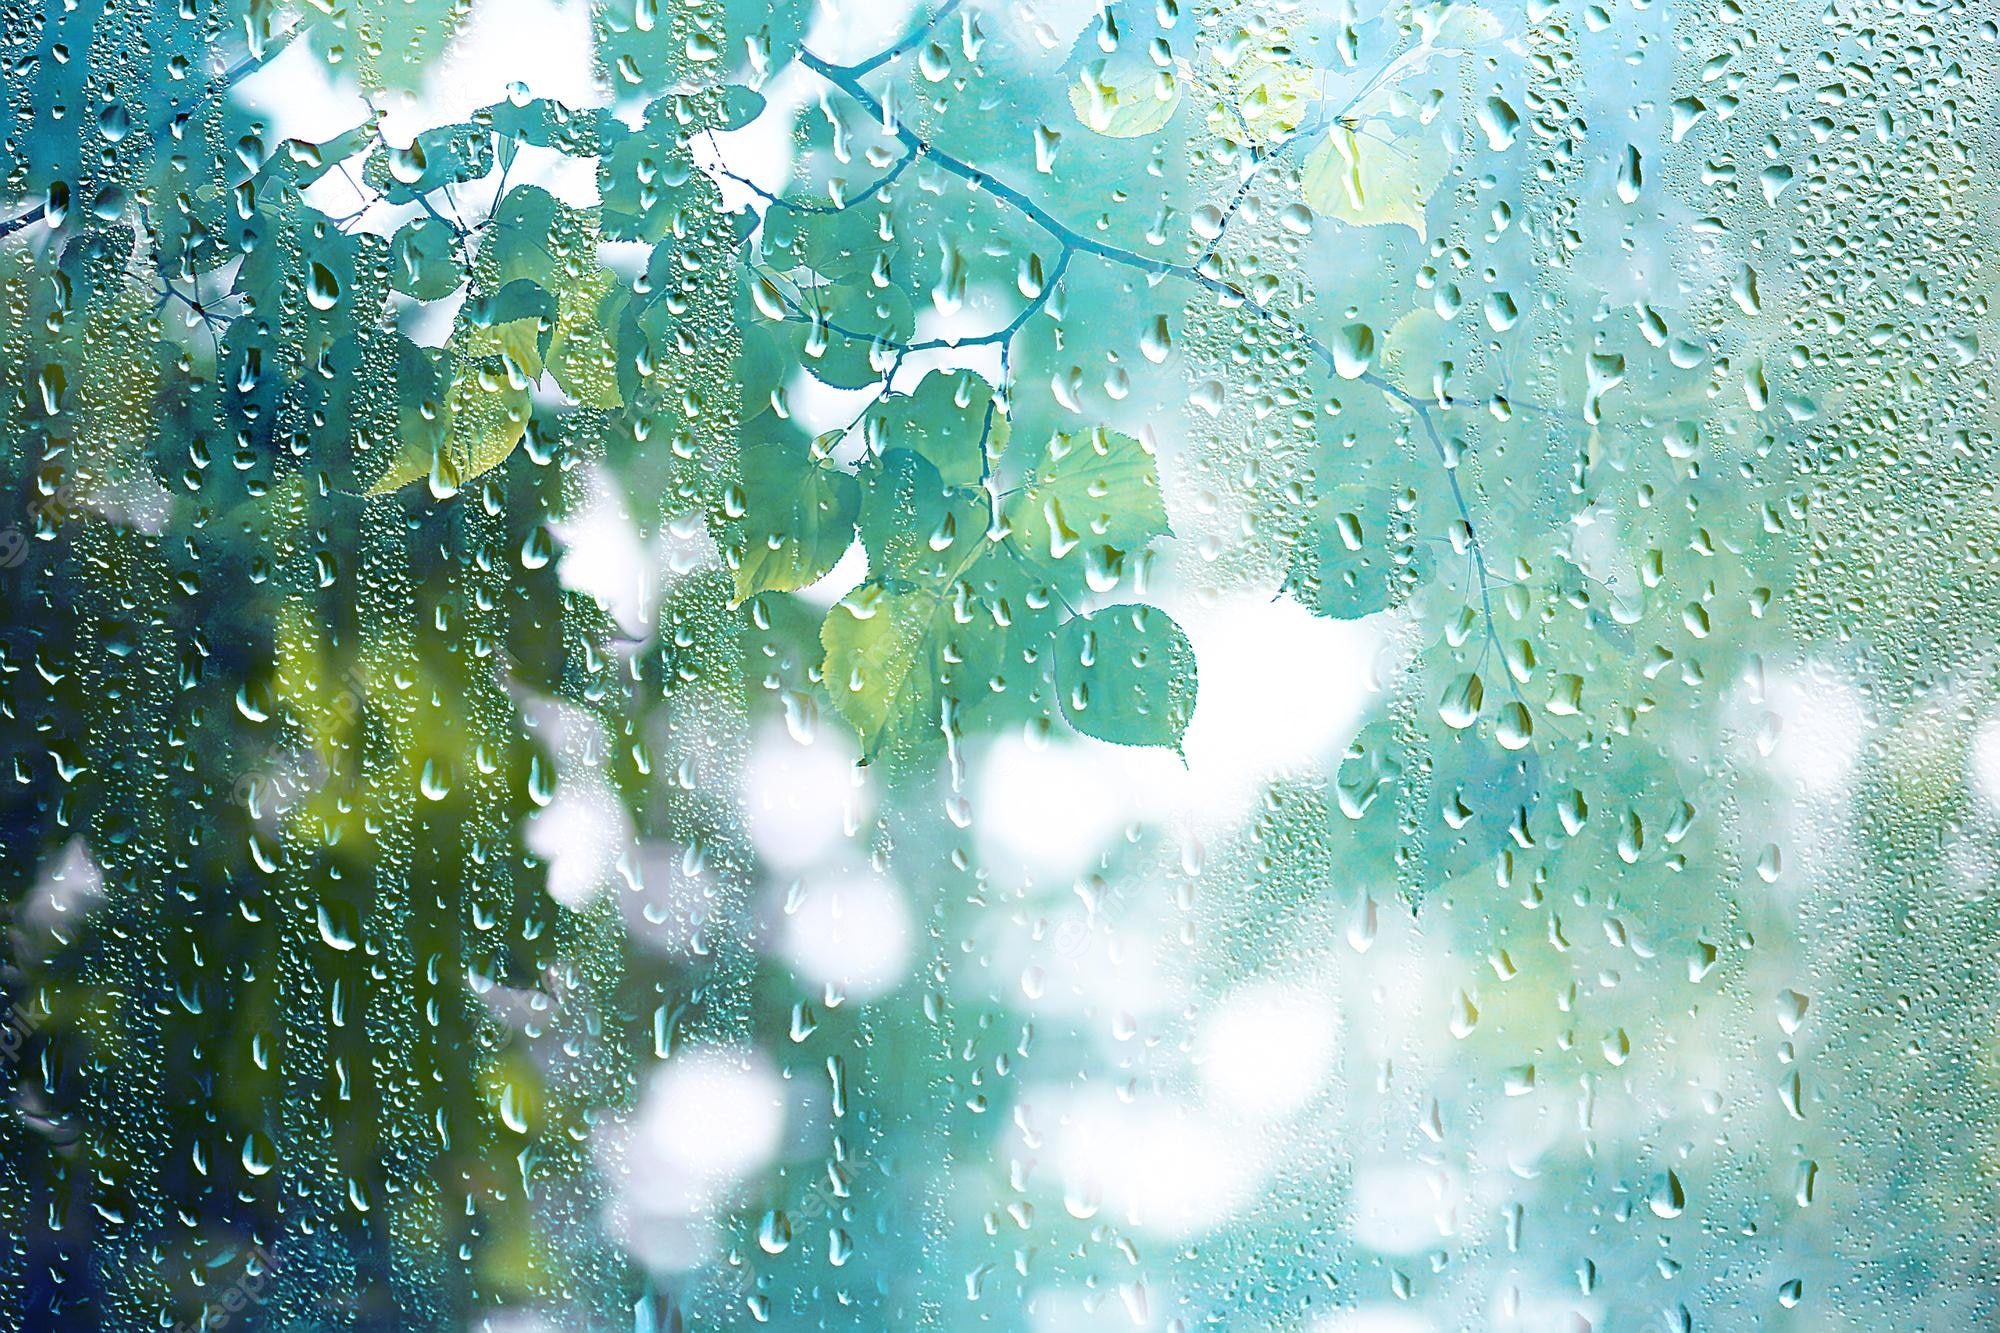 Rainy Window Image